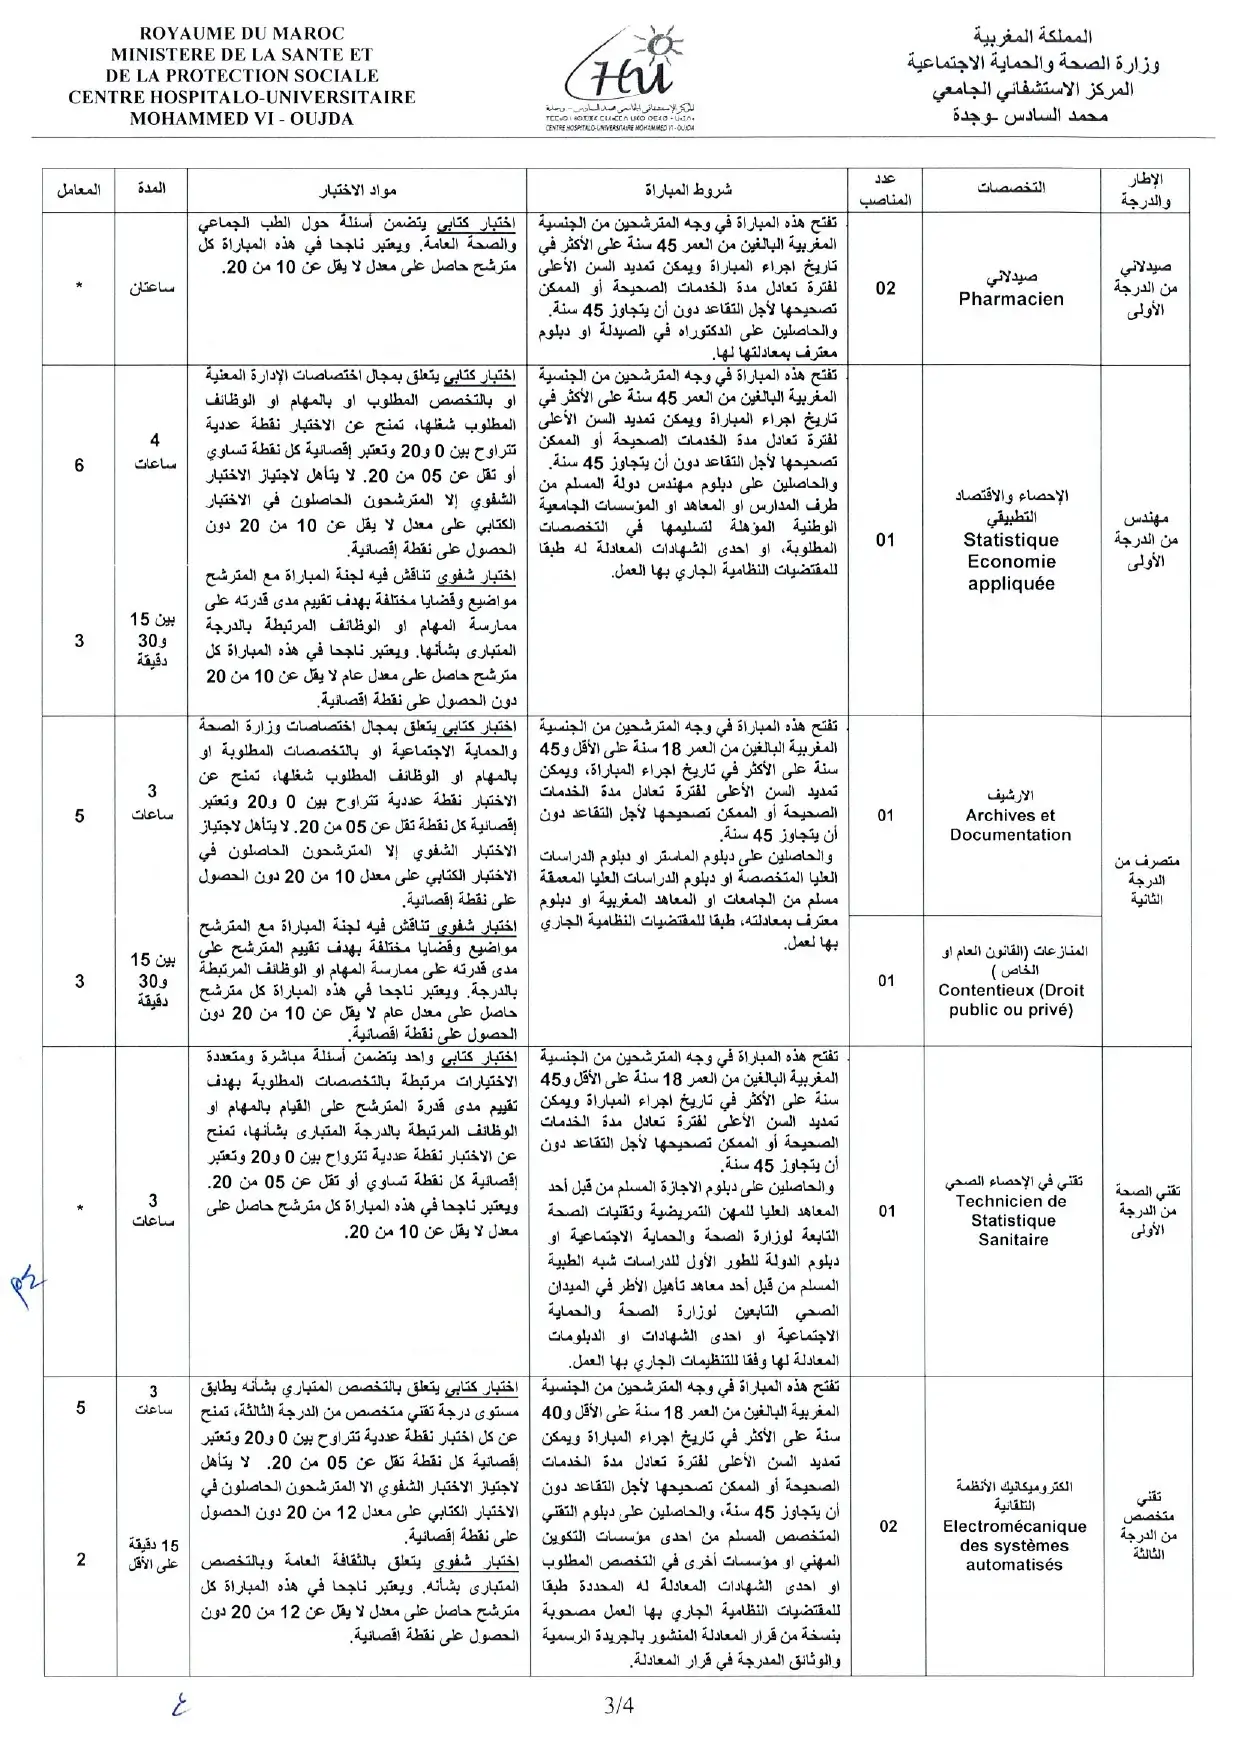 Concours de recrutement CHU Mohemed VI Oujda 2022